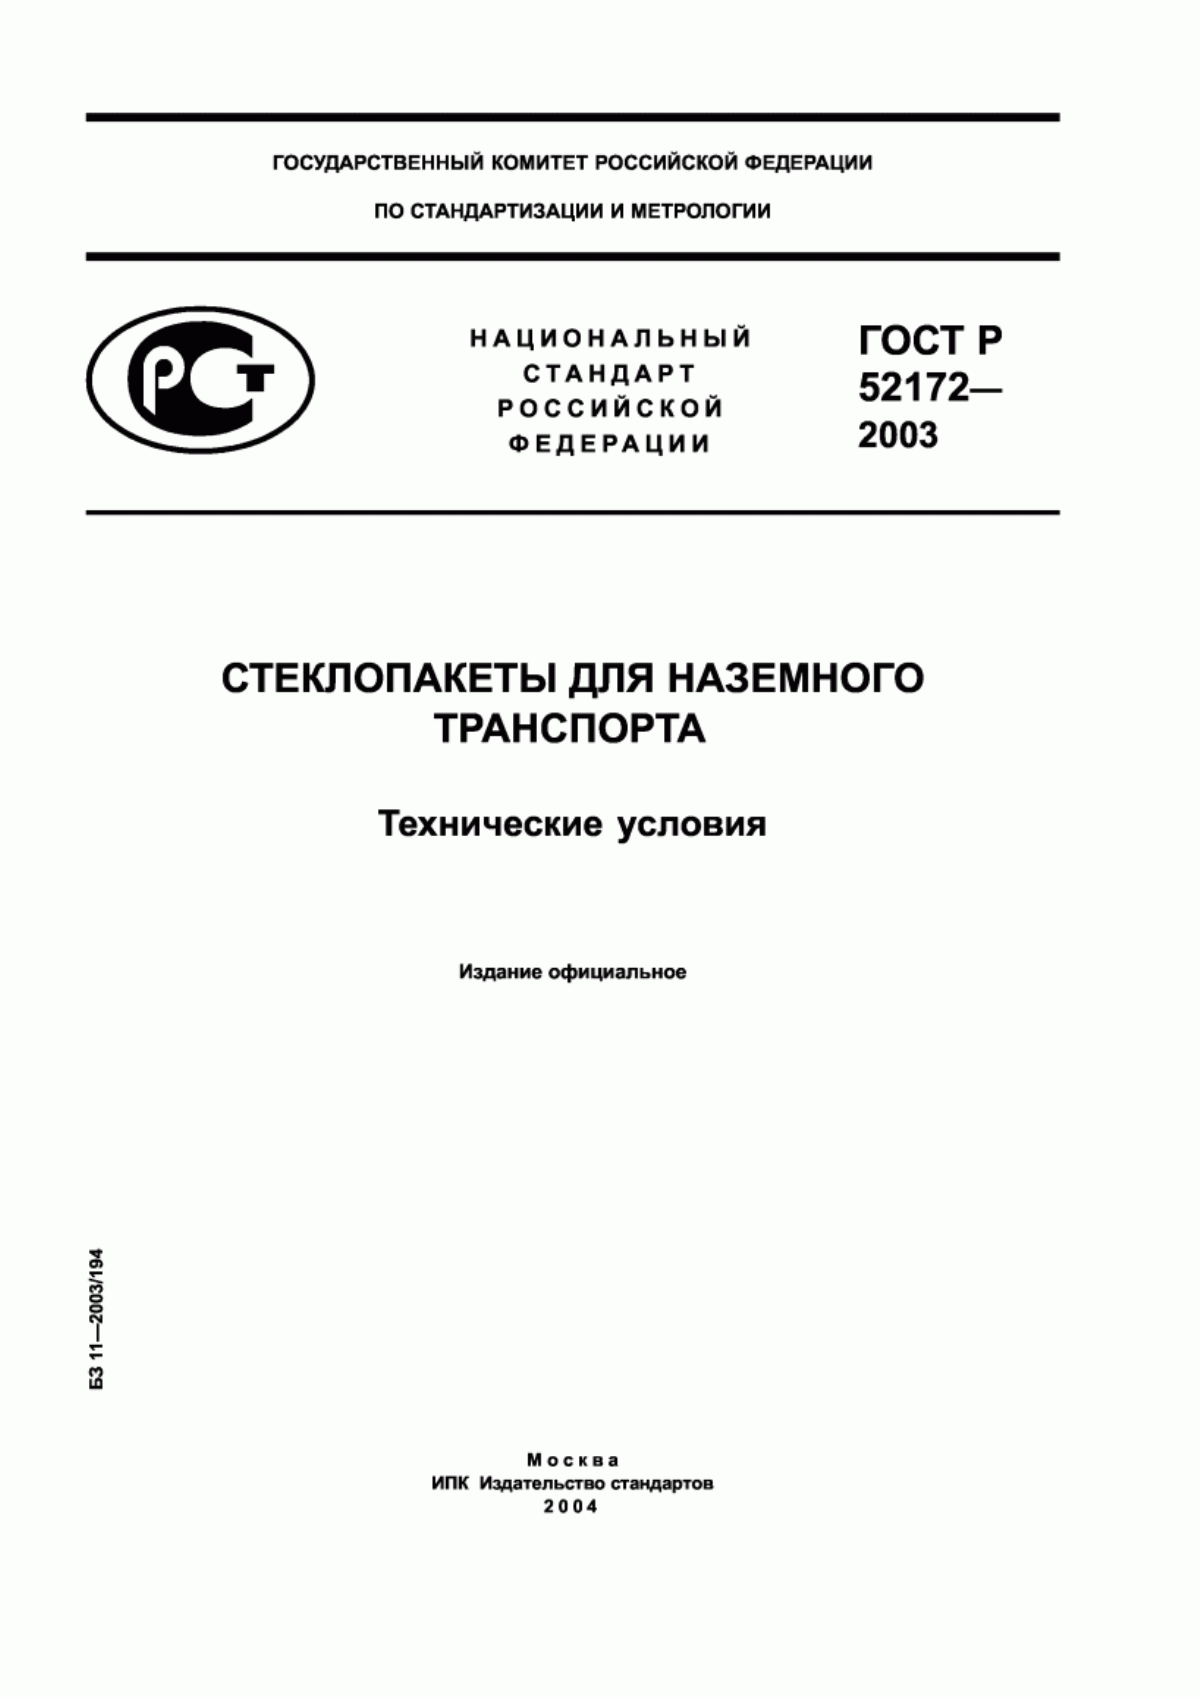 ГОСТ Р 52172-2003 Стеклопакеты для наземного транспорта. Технические условия